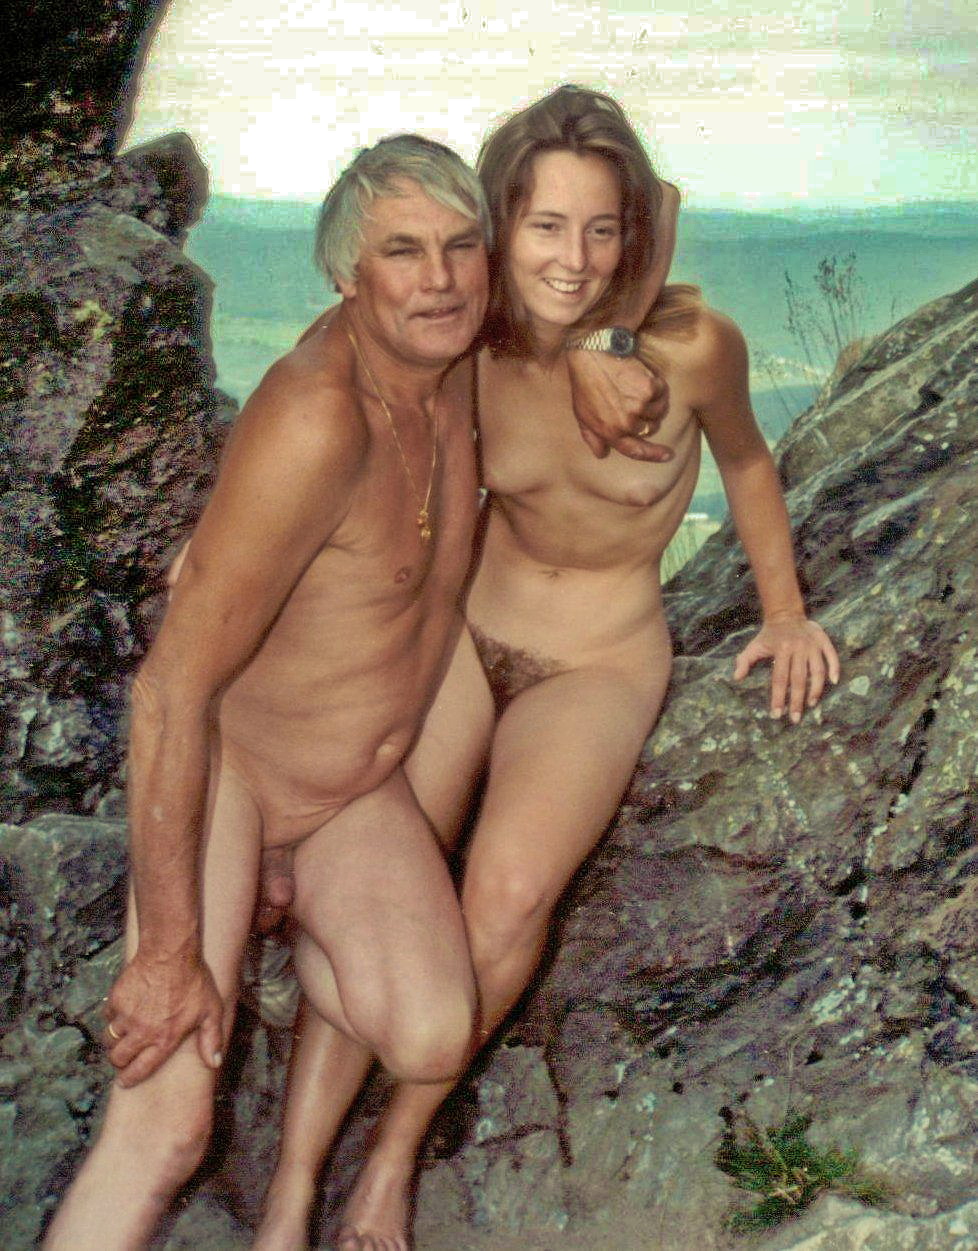 https://www.nudismlife.com/galleries/nudists_and_nude/nudists_couple/nudists_nude_naturists_couple_0887.jpg